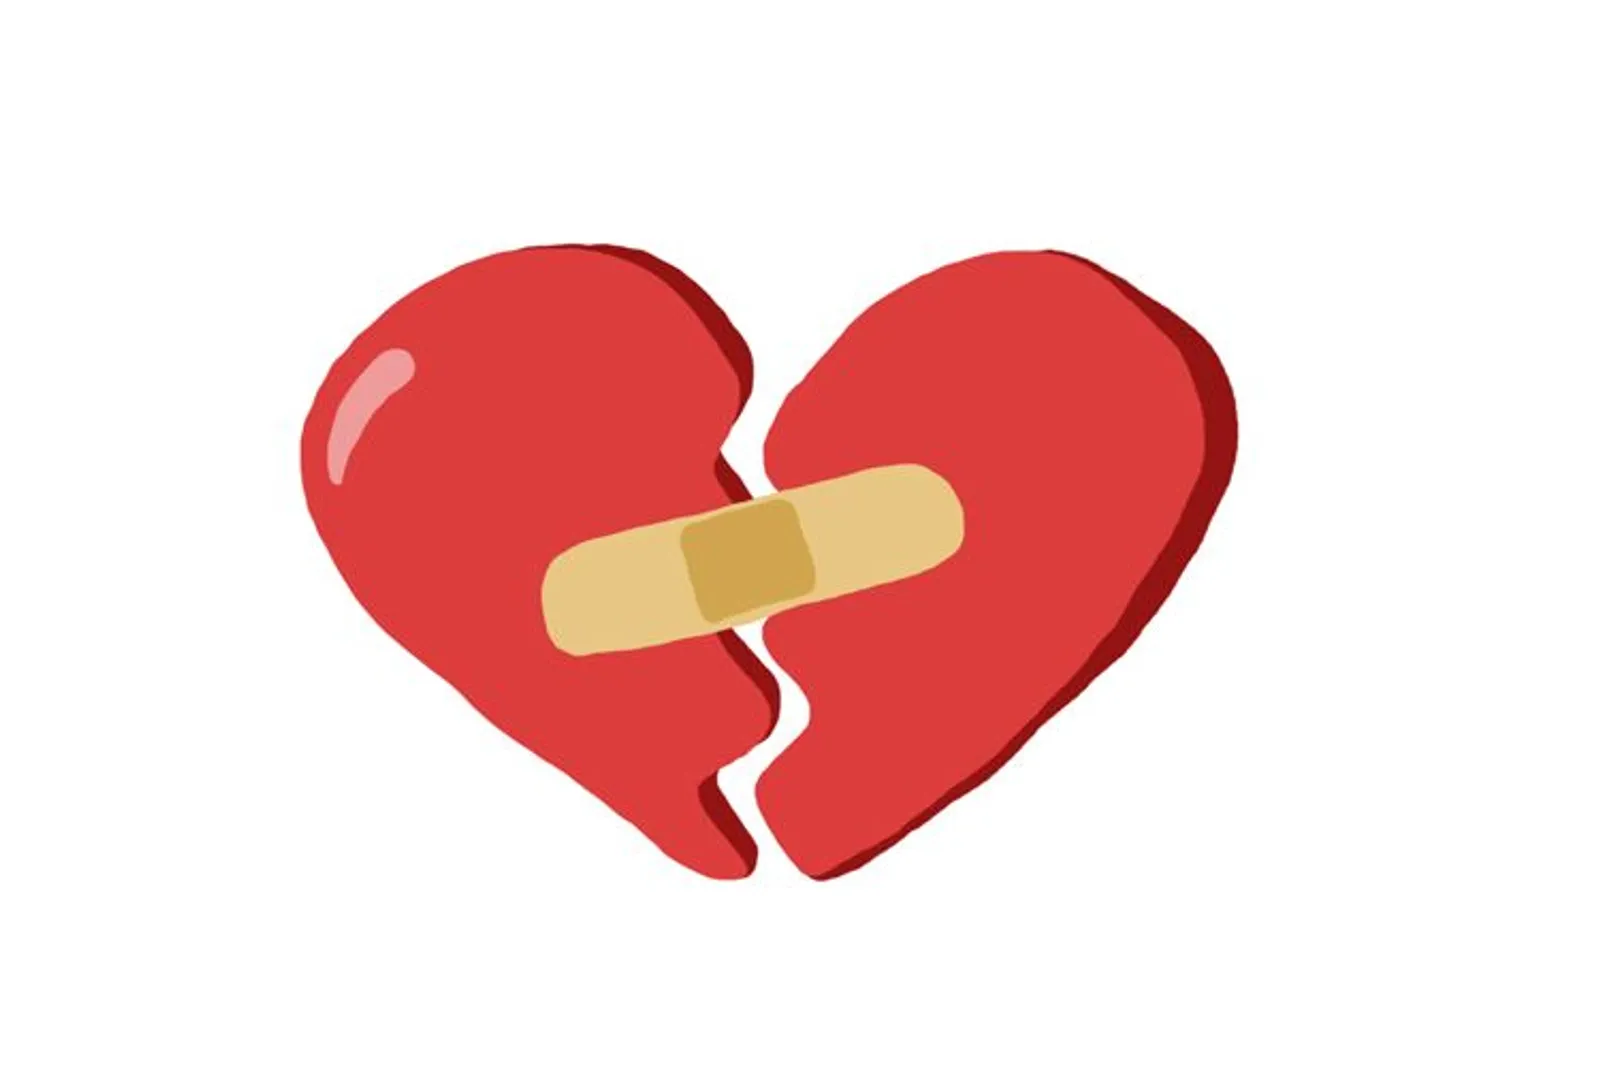 Ungkap 6 Hal Baik dalam Hubungan yang Justru Bikin Pasangan Sakit Hati